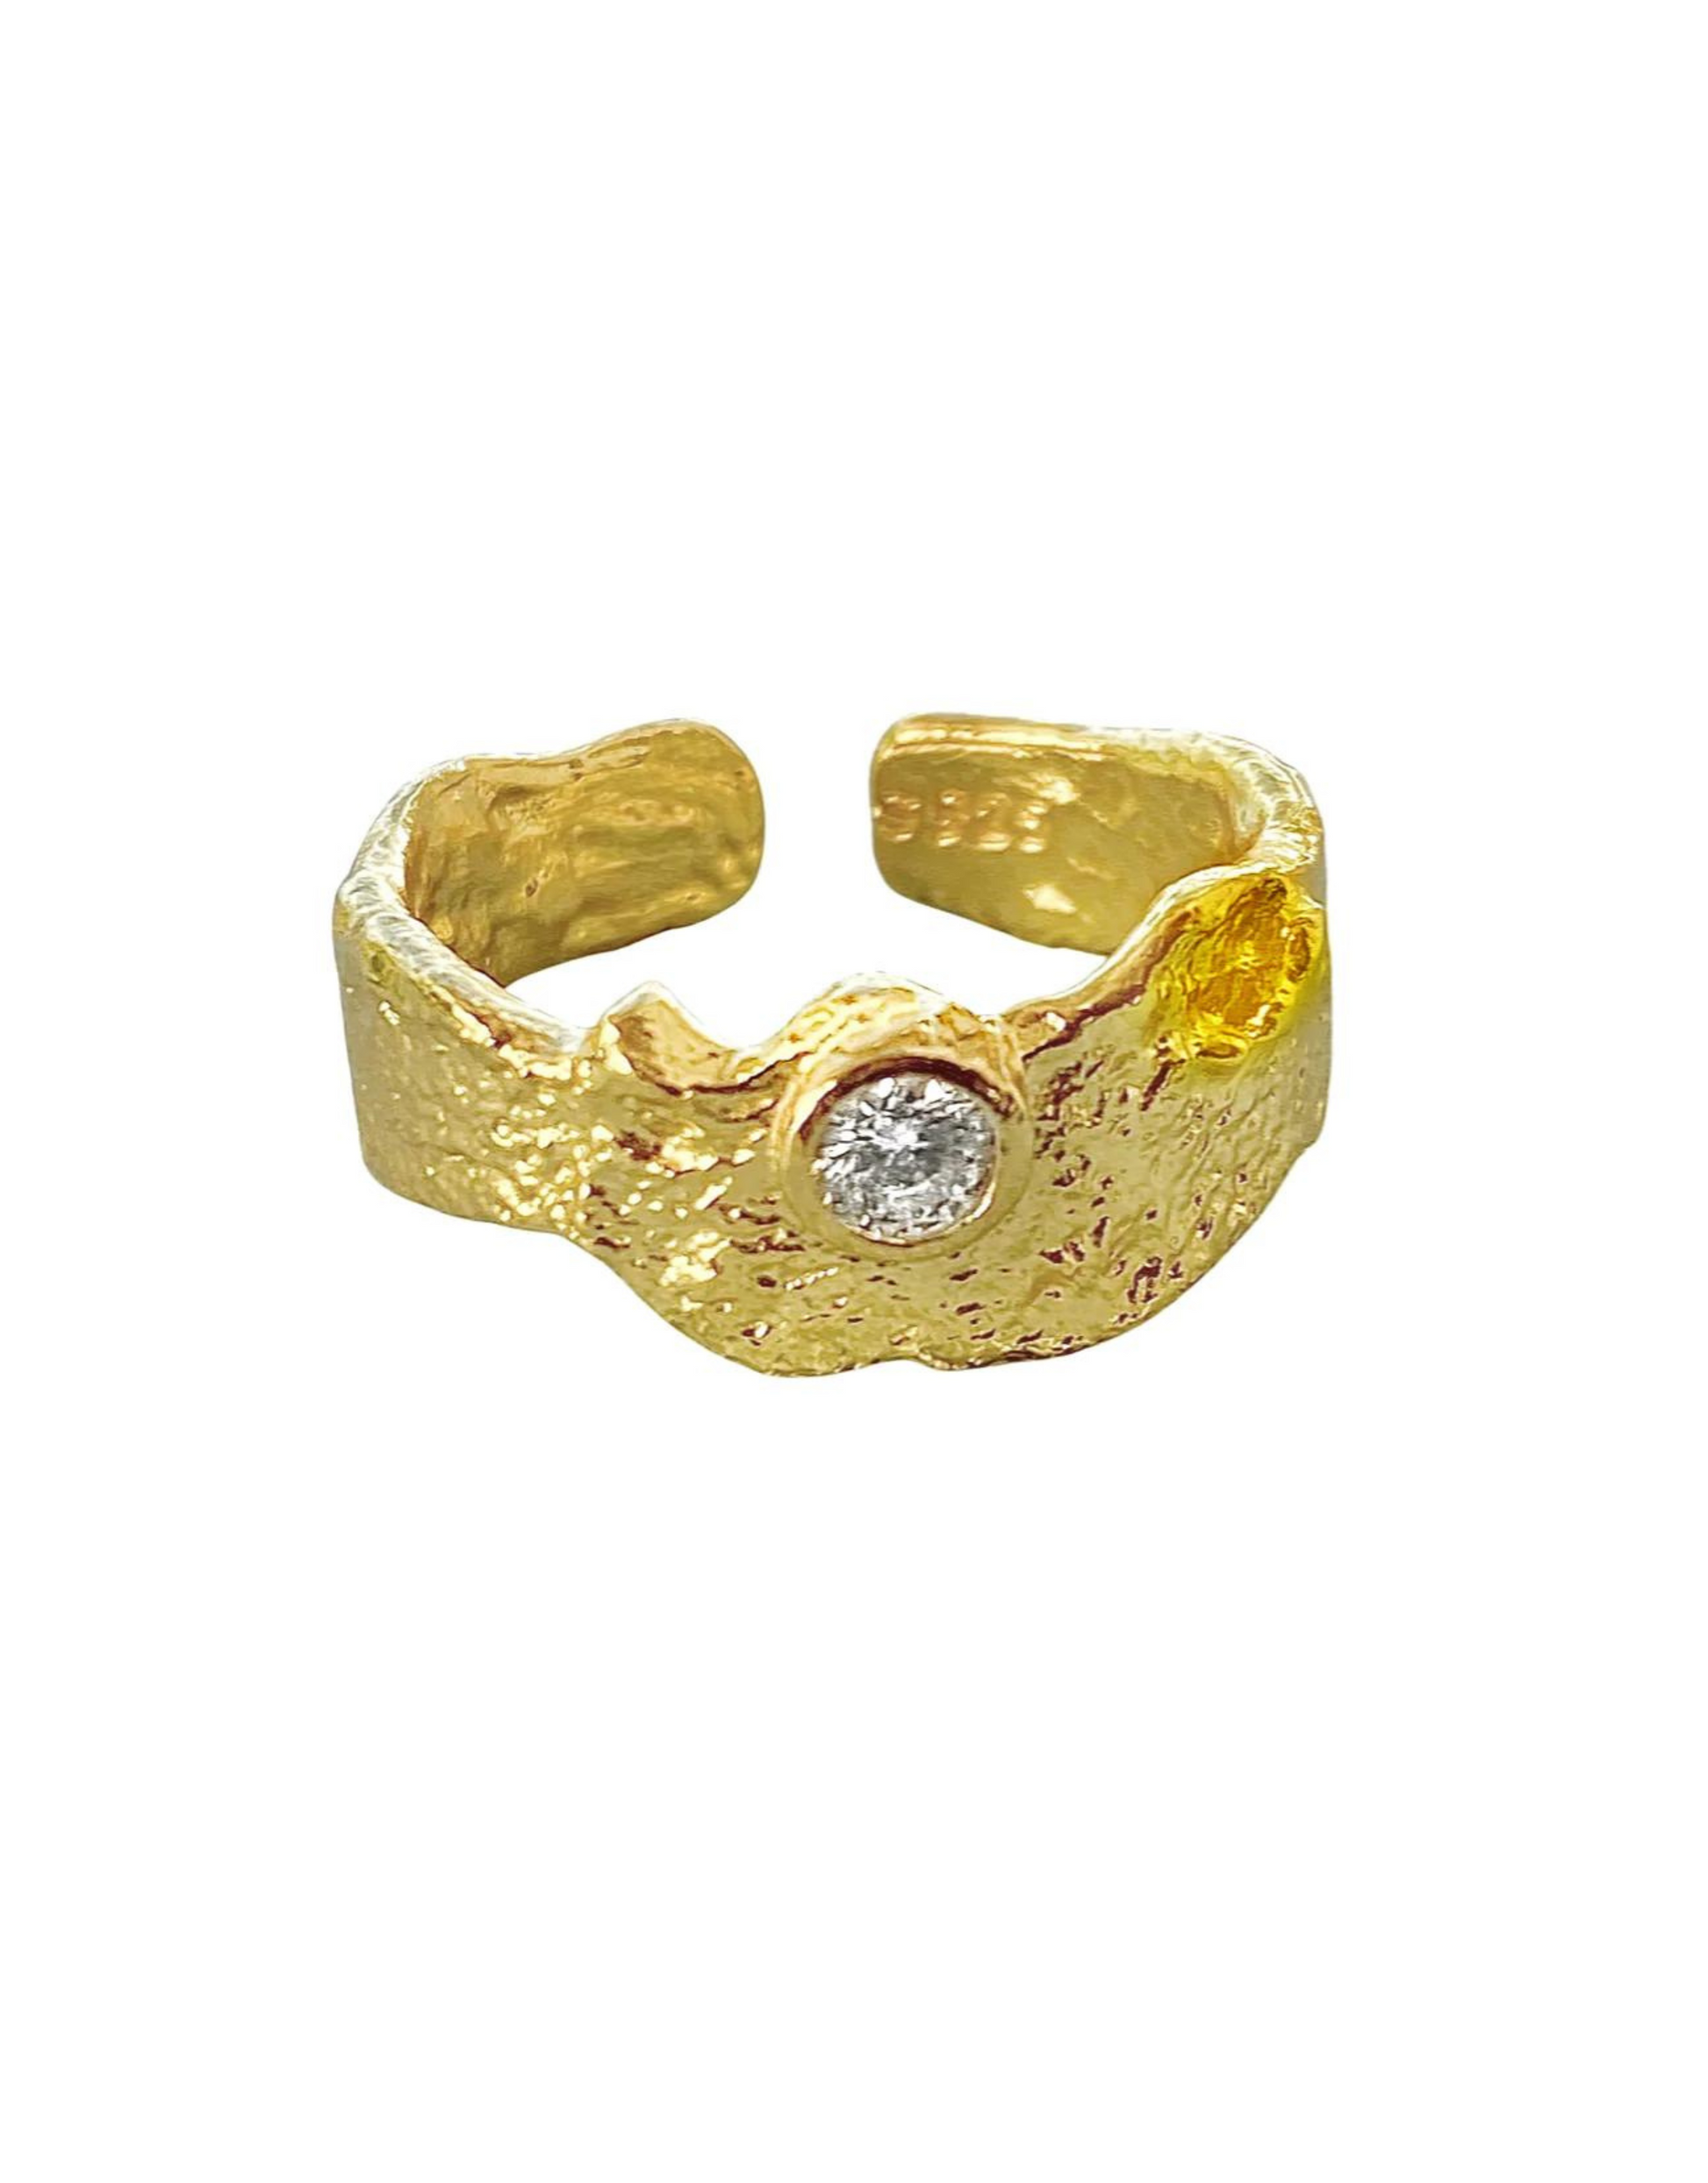 Lilje ring i sølv.  Elegant ring i guld med de fineste detaljer og en lille zircon sten i. Ringen er i et mat guld look med abstrakte deltaljer.  Materiale: S925 sterling sølv, zircon sten Mål: Justerbar